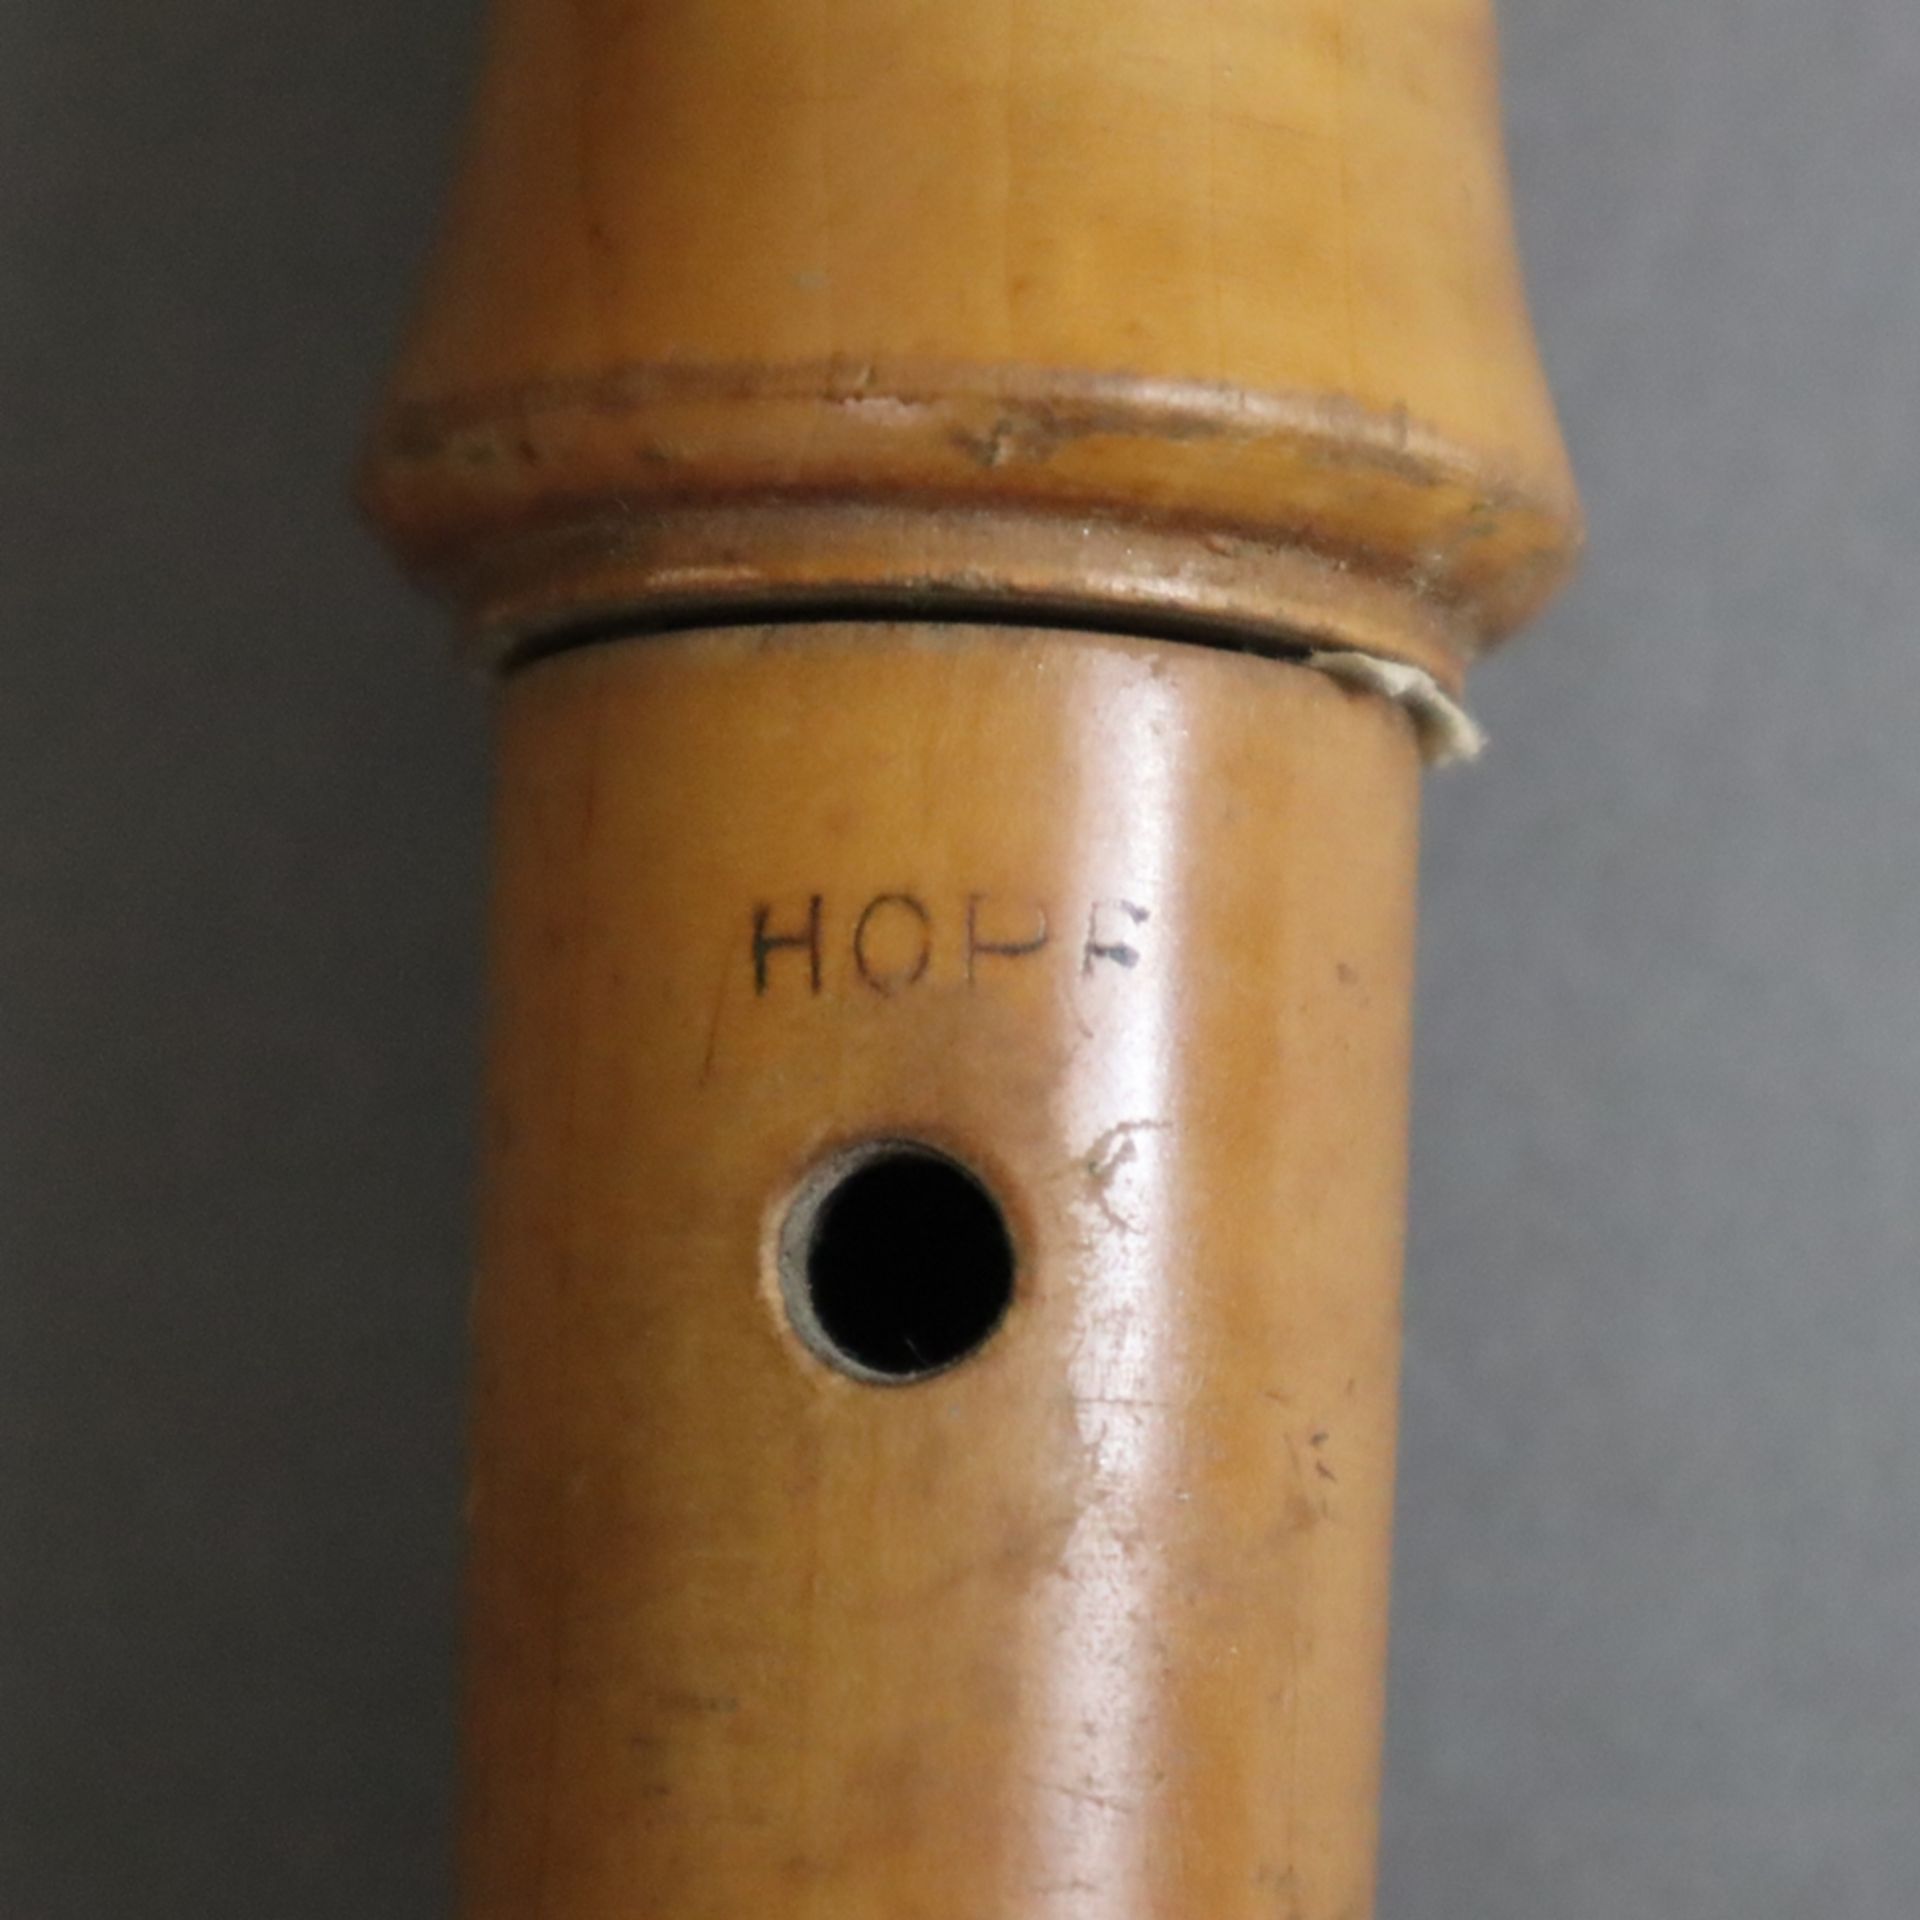 Alte Blockflöte - Hopf, Modell "Extra", Holz, Gebrauchsspuren, L.ca.48,5cm - Bild 7 aus 7